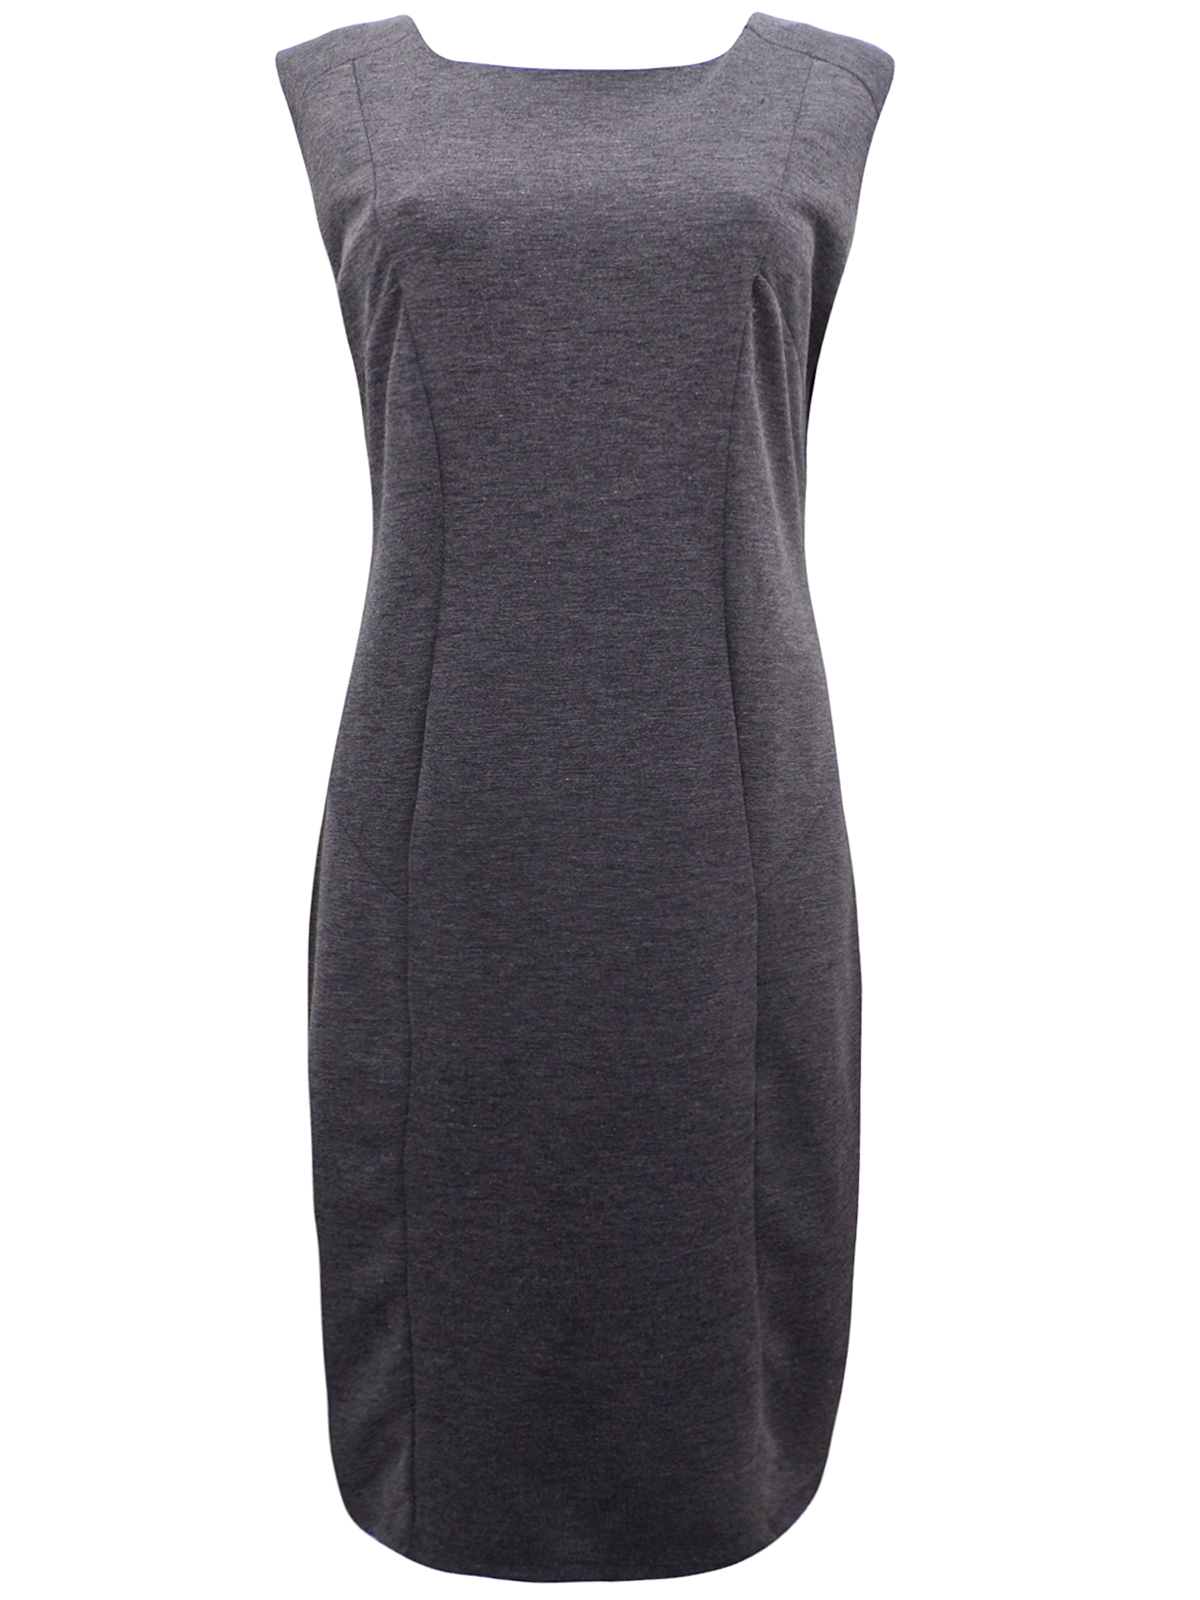 Beales - - Beales GREY Sleeveless Panelled Shift Dress - Size 12 to 18